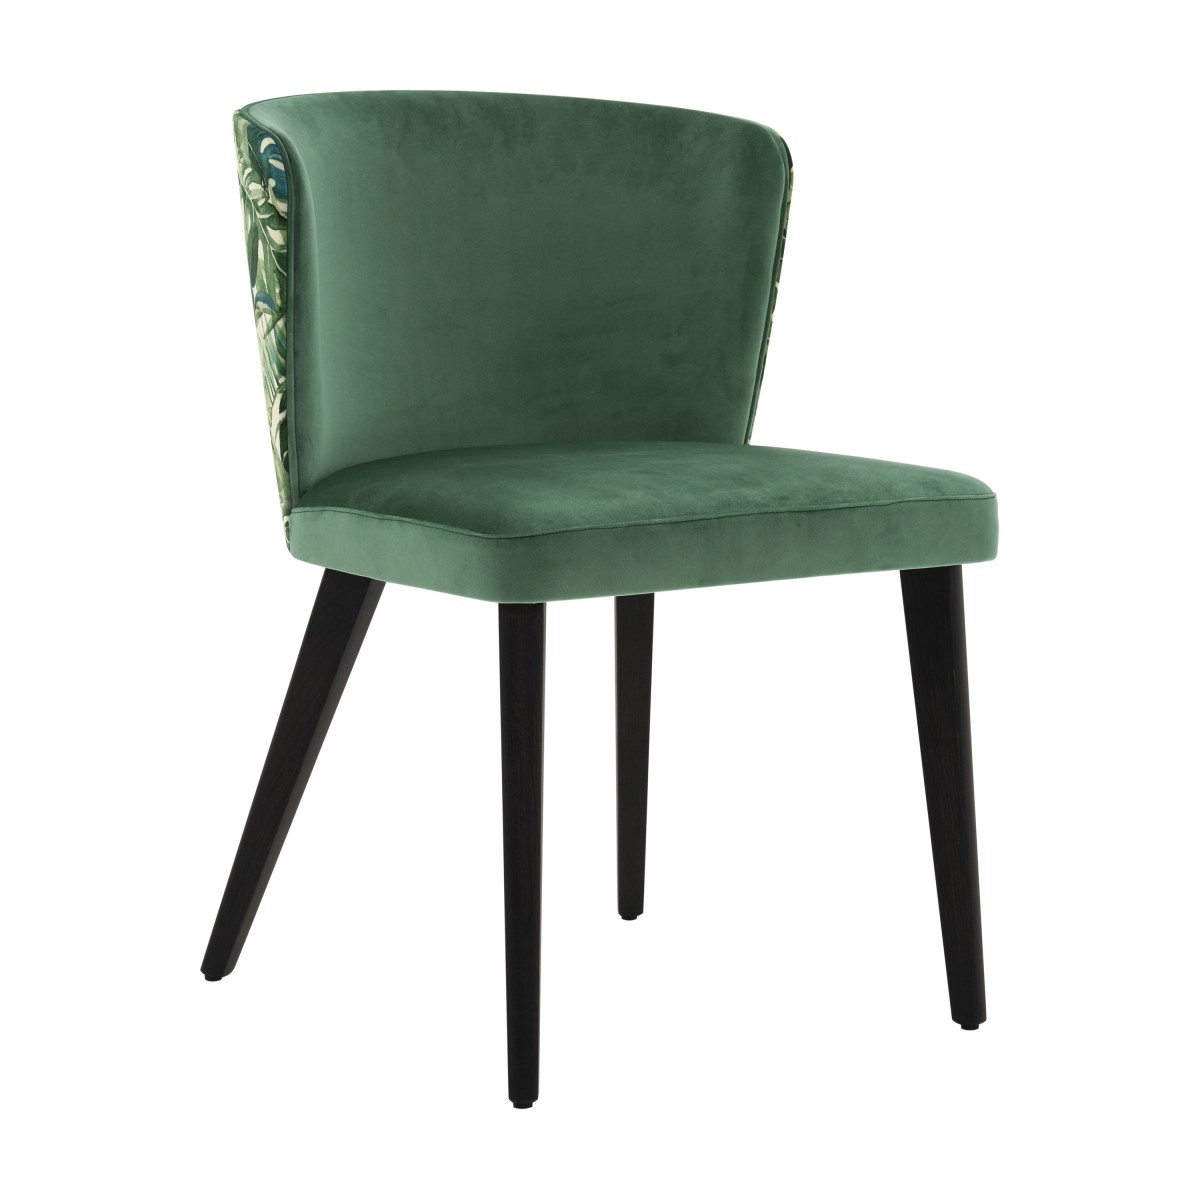 italian chair eva 6010